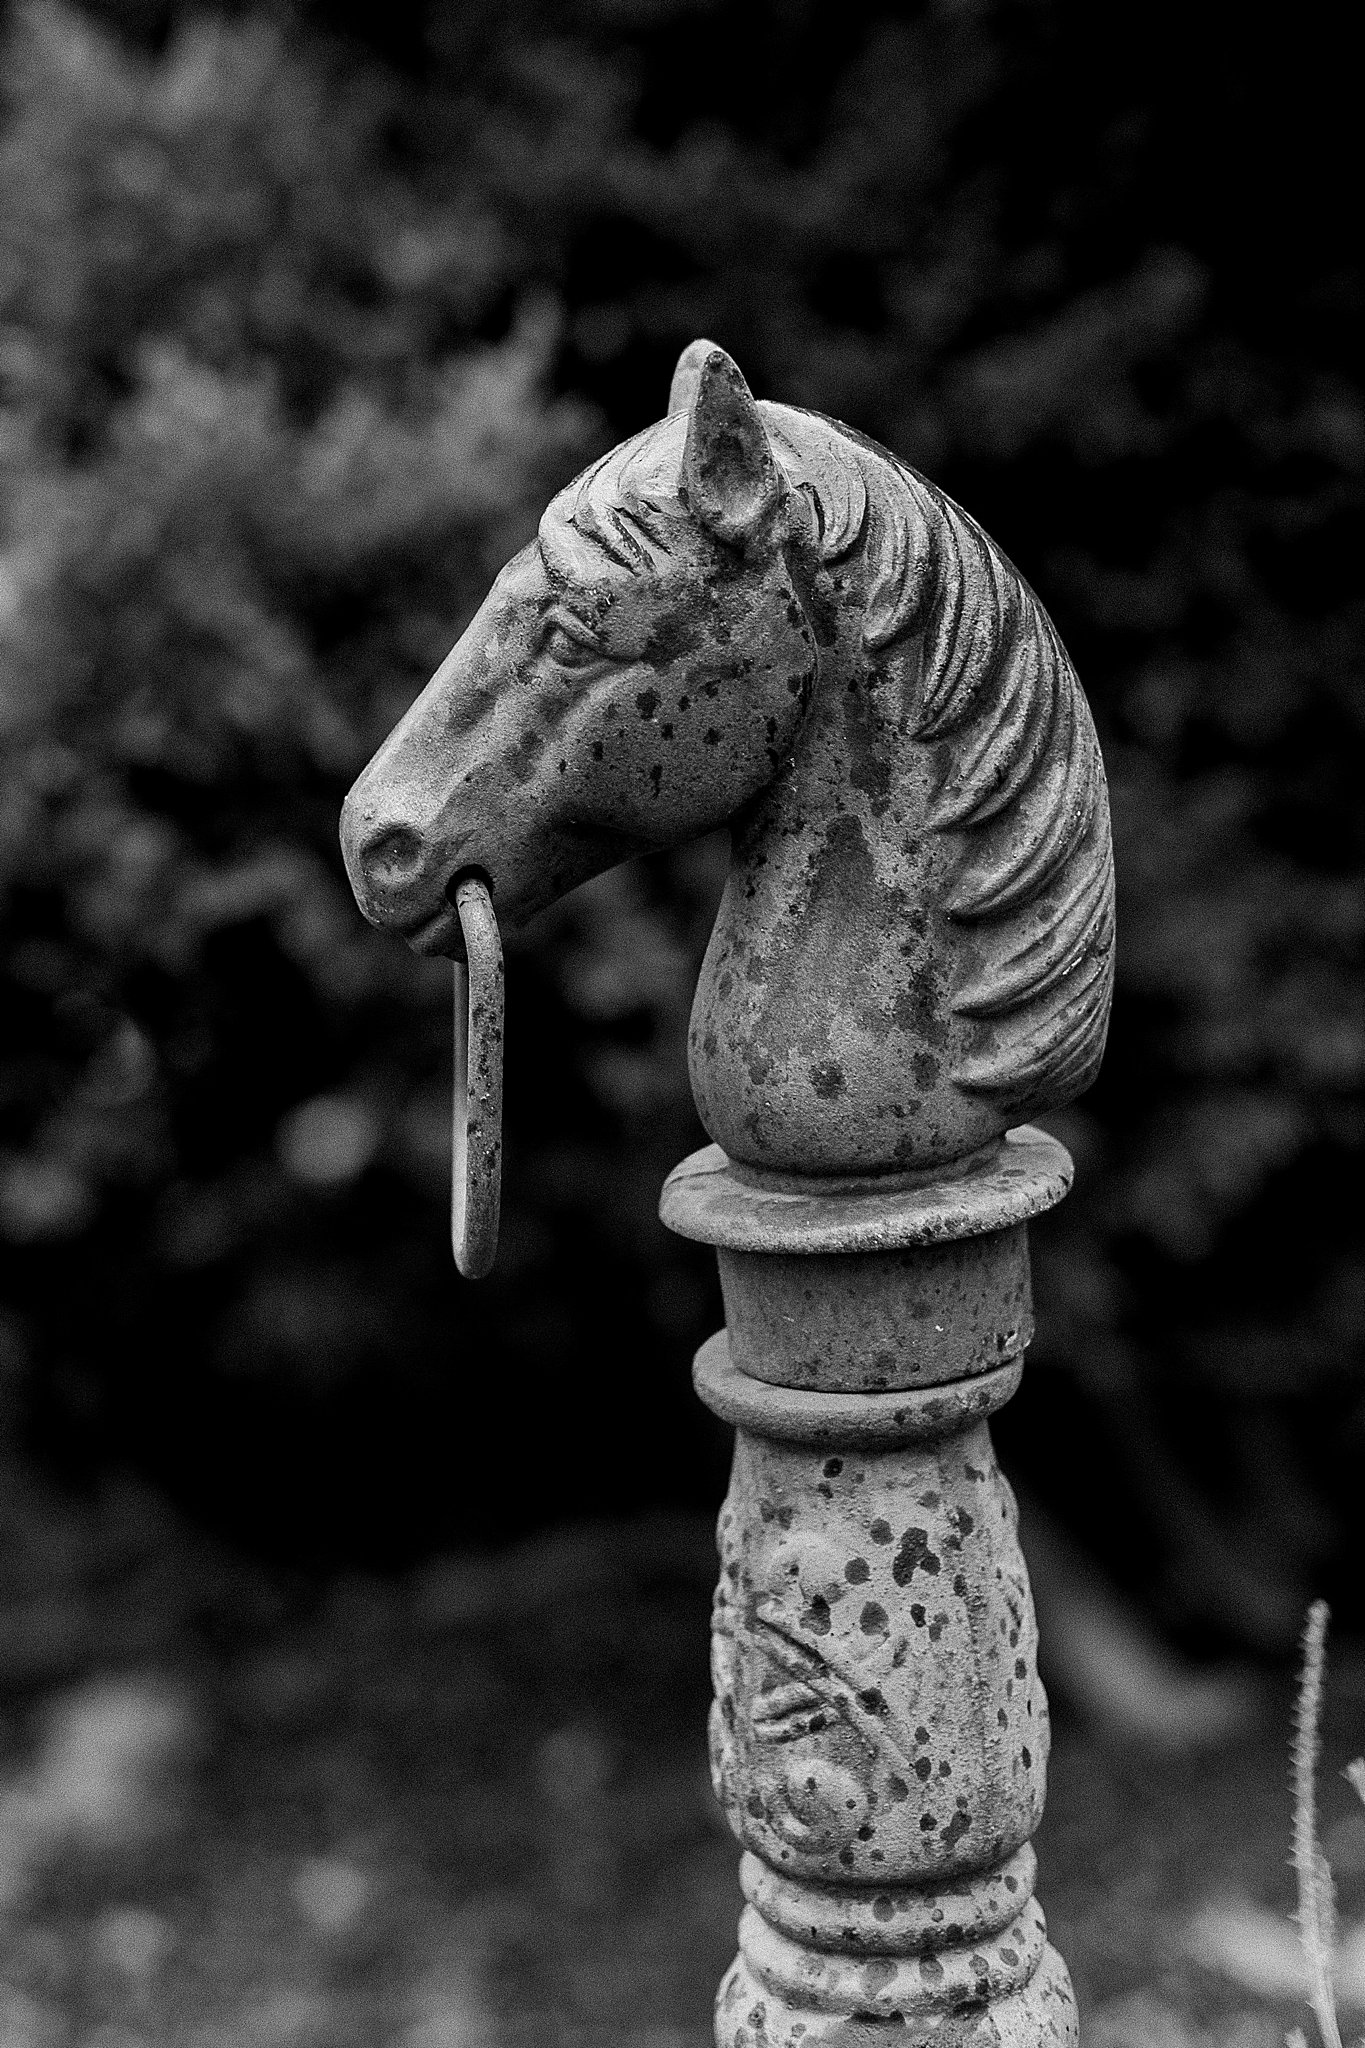 Horse hitch- beautiful details at the Goodstone Inn retreat